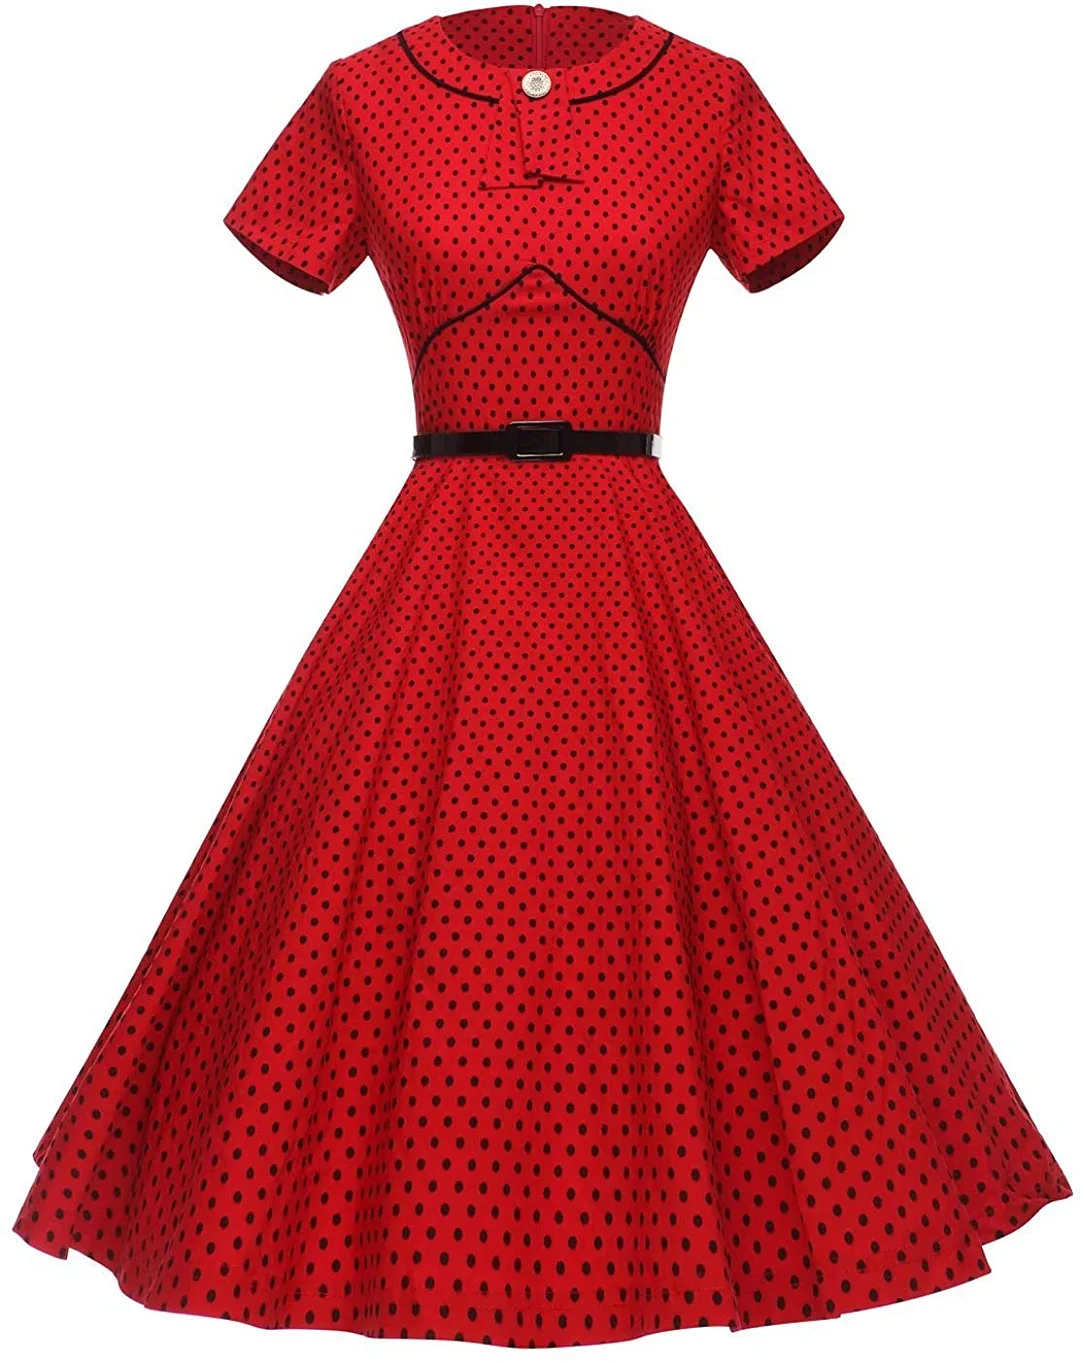 Women's 1950s Polka Dot Vintage Dresses Audrey Hepburn Style Party Dresses